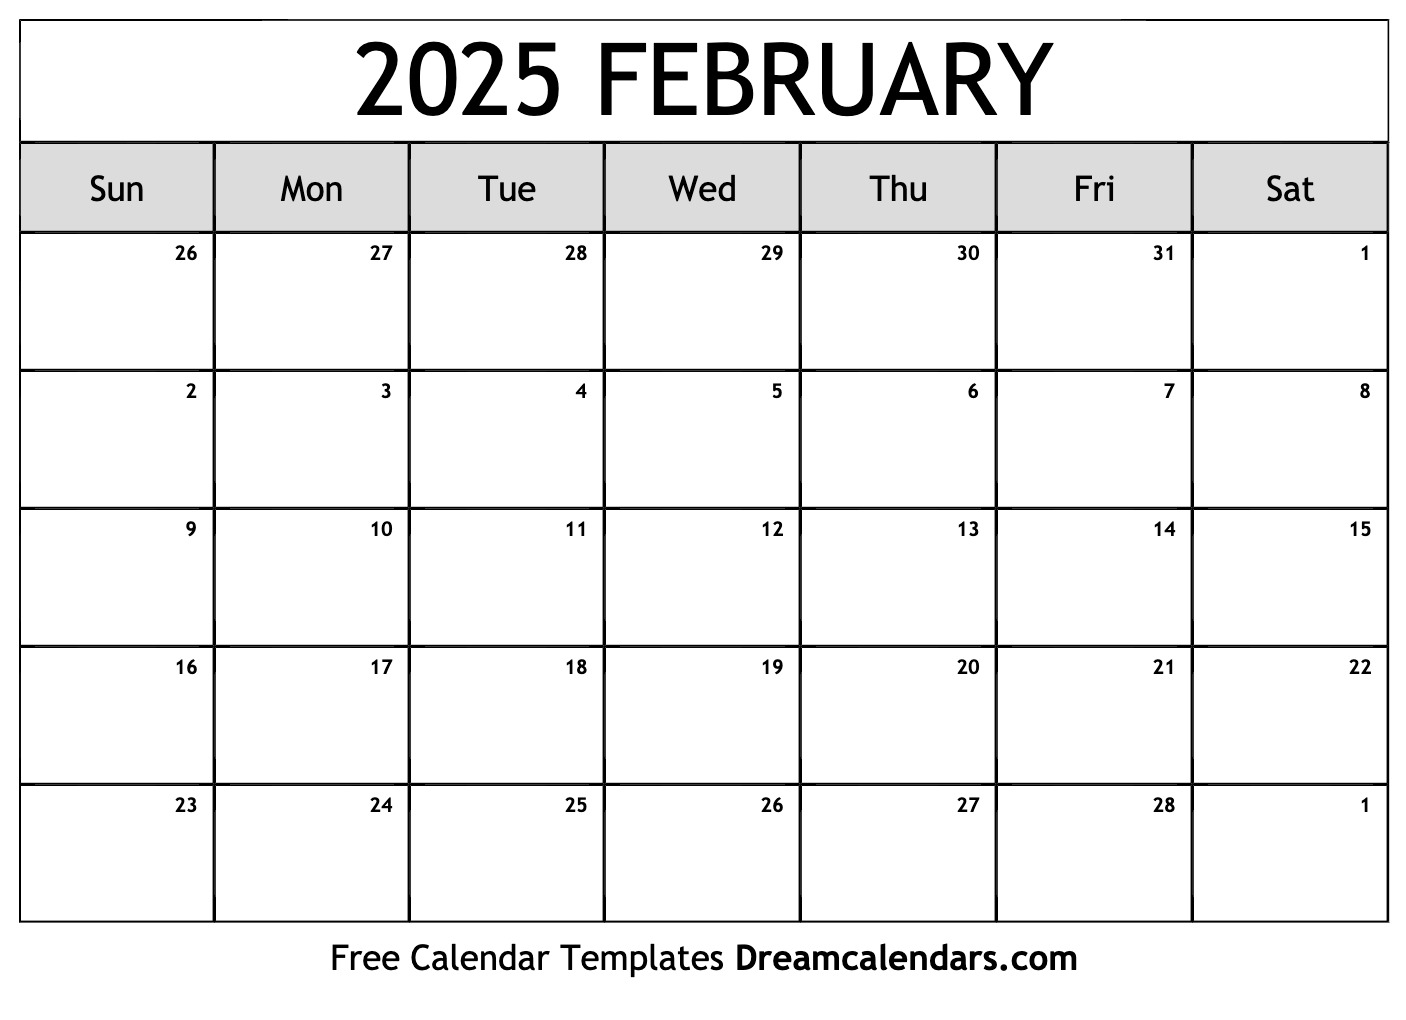 February 2025 Calendar Free Blank Printable With Holidays